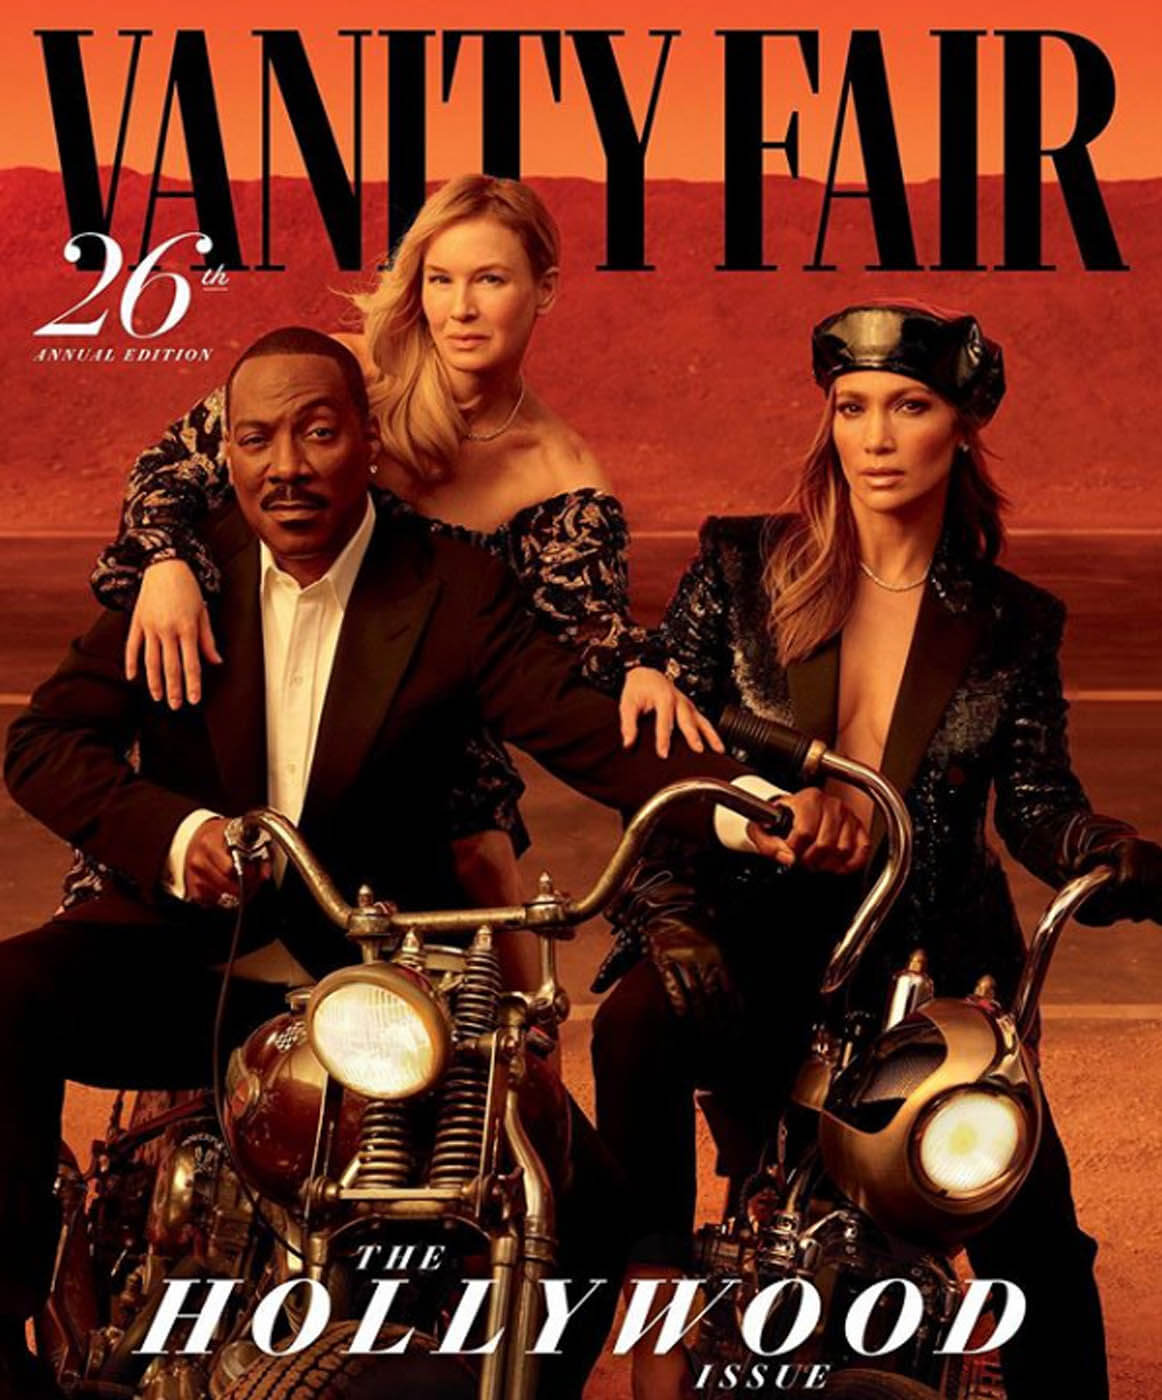 Vanity Fair Hollywood Issue cover amplifies Oscar snub conversation